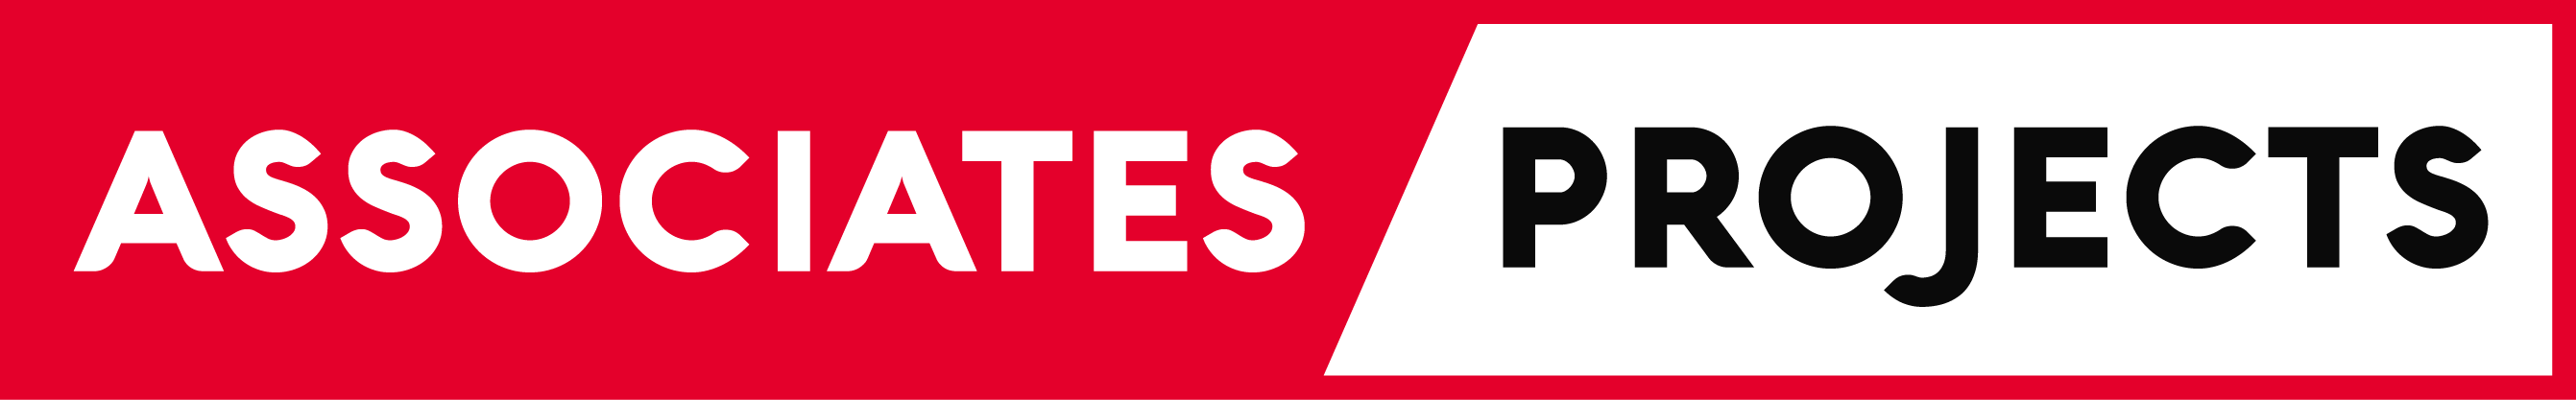 Associates logo